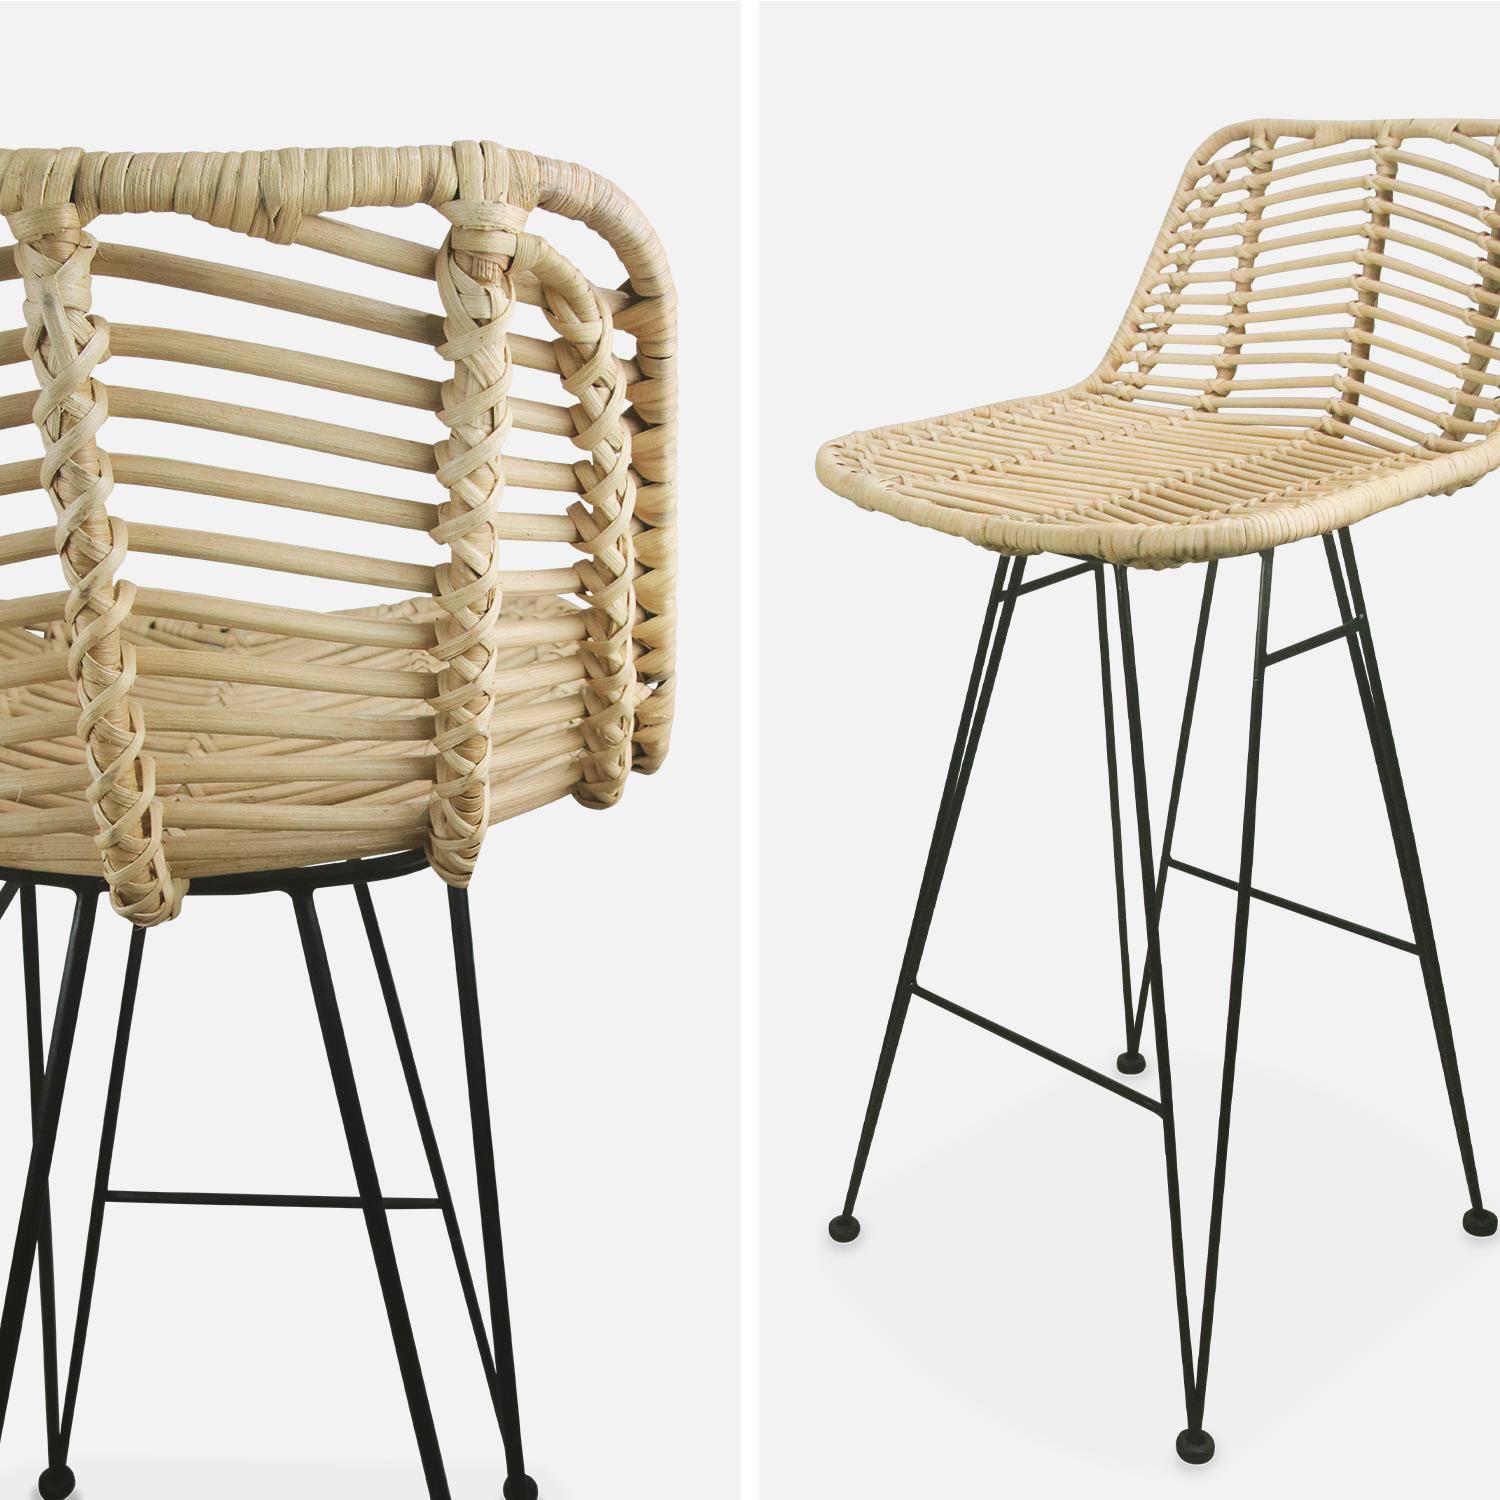 Pair of rattan bar stools with cushions, seat height 67cm, Natural rattan, Black cushions, Cahya,sweeek,Photo7